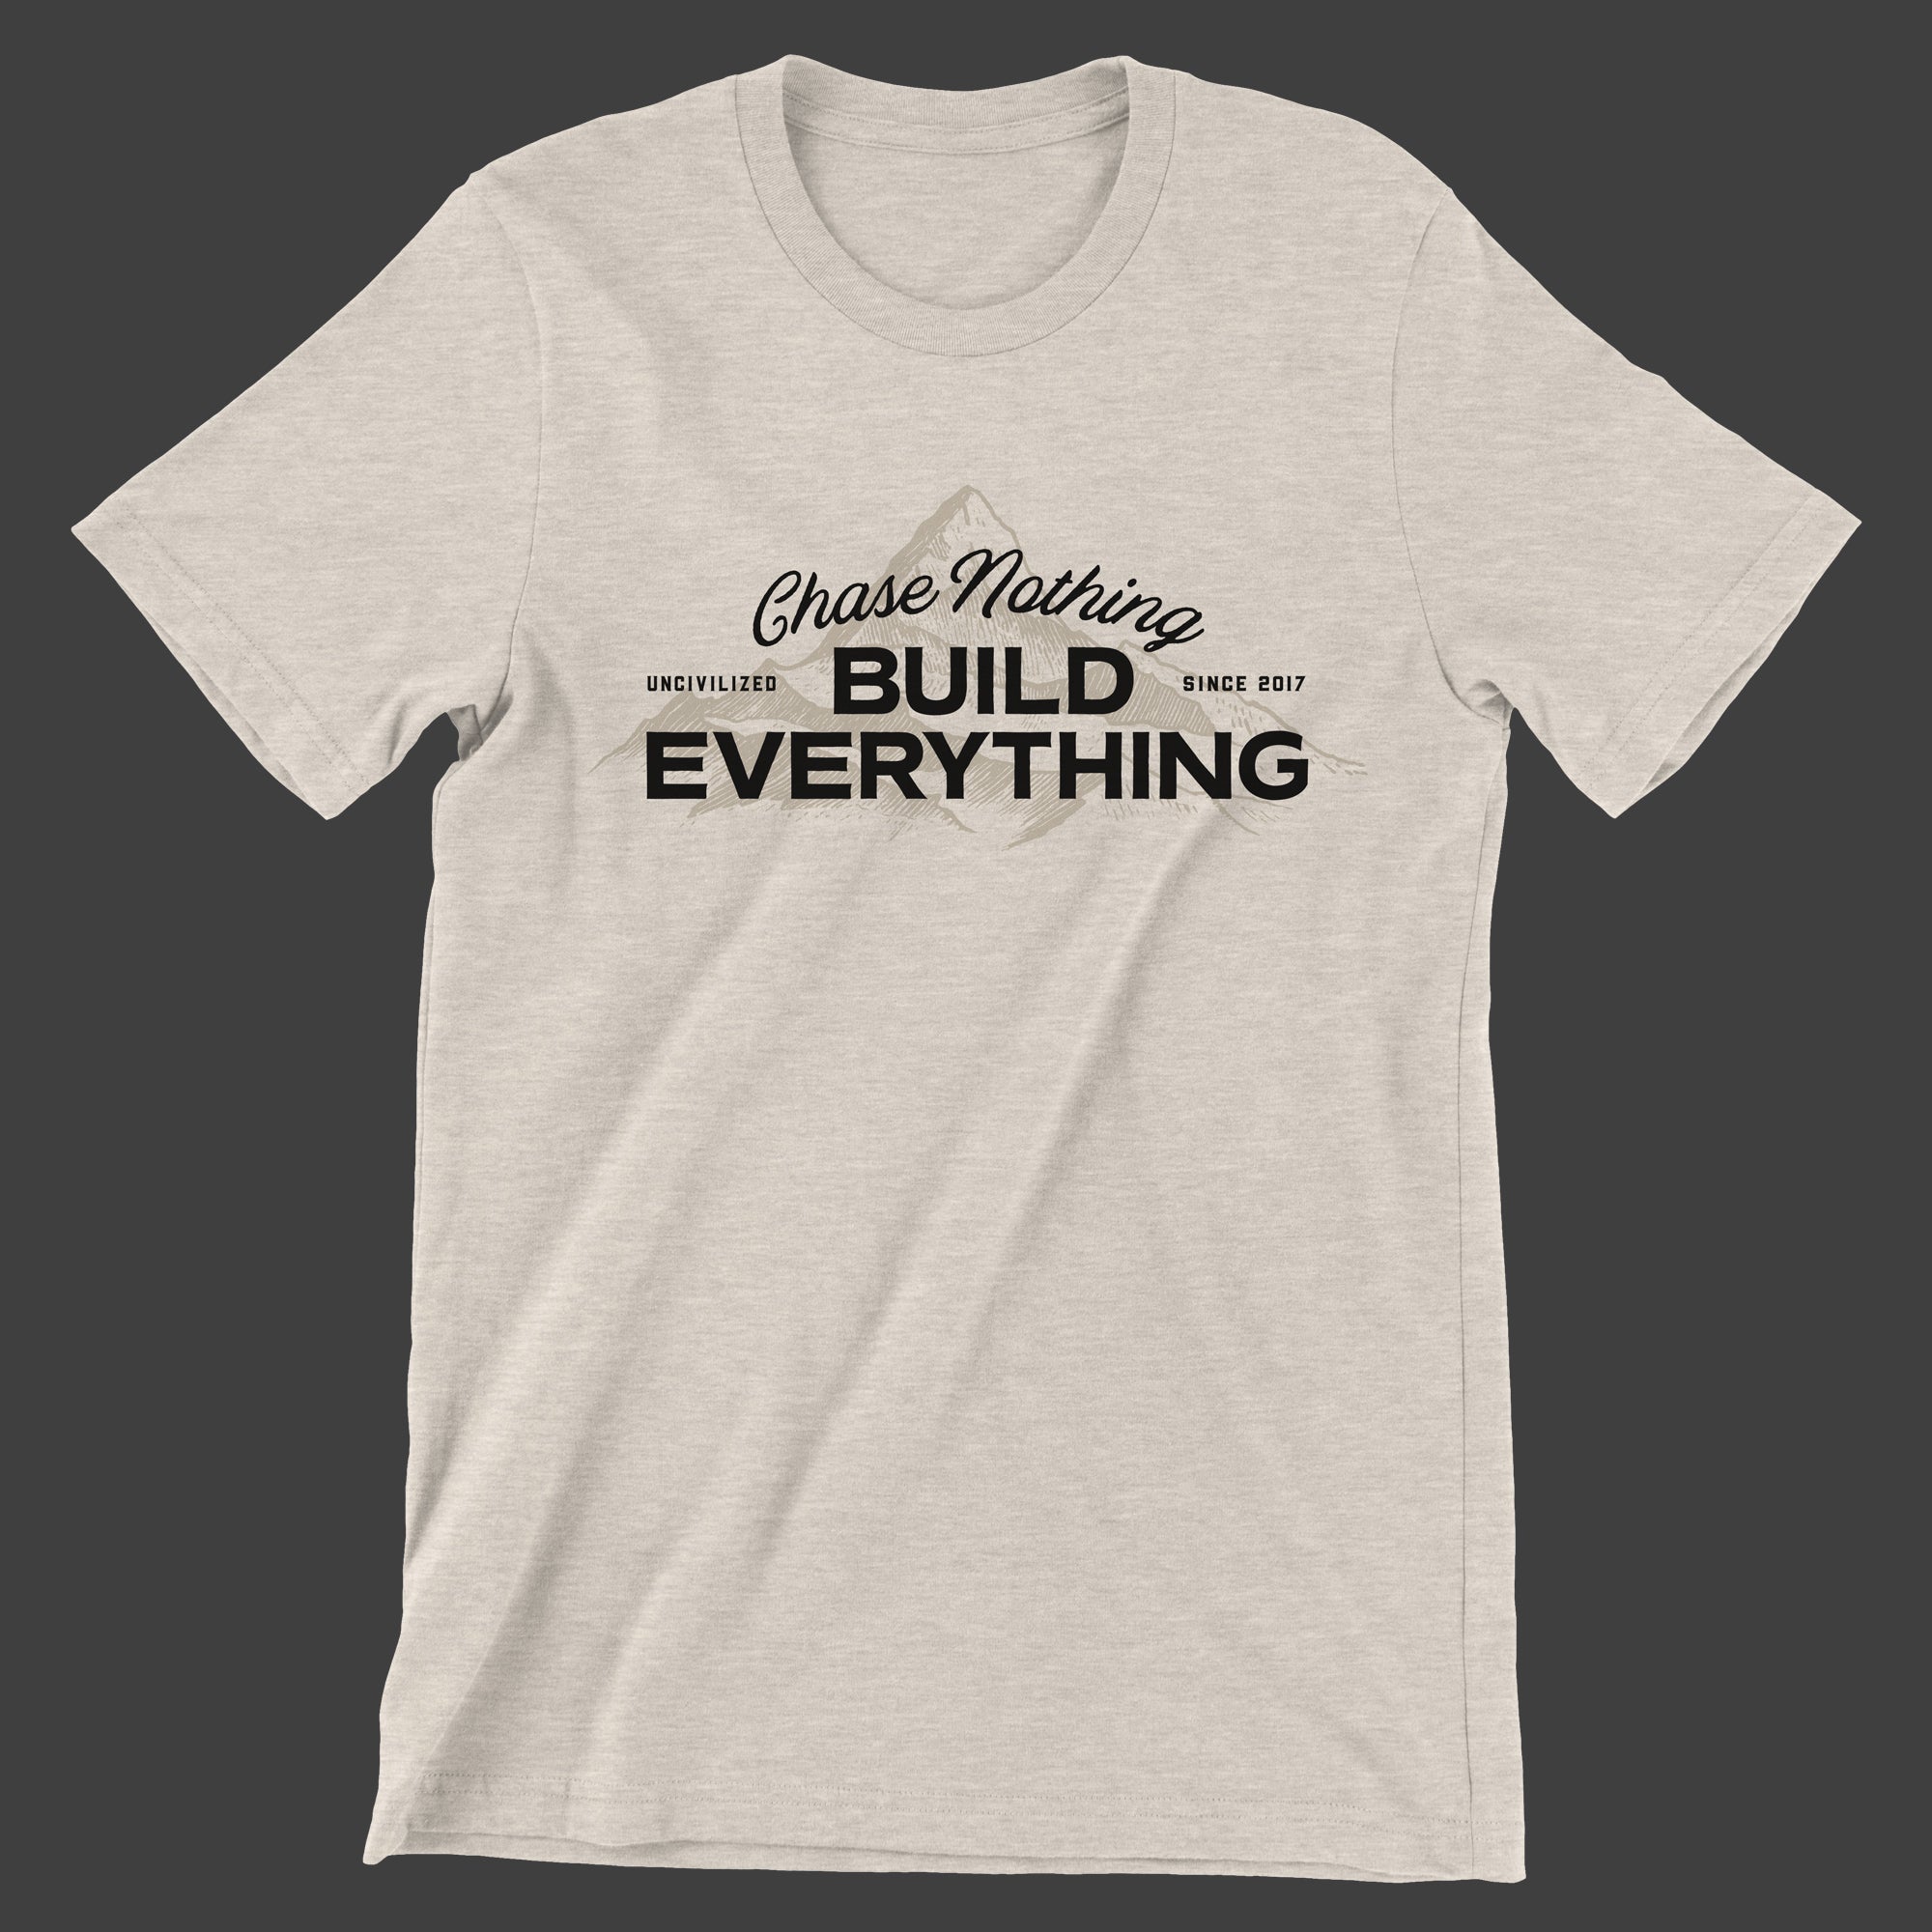 Chase Nothing Build Everything T-Shirt